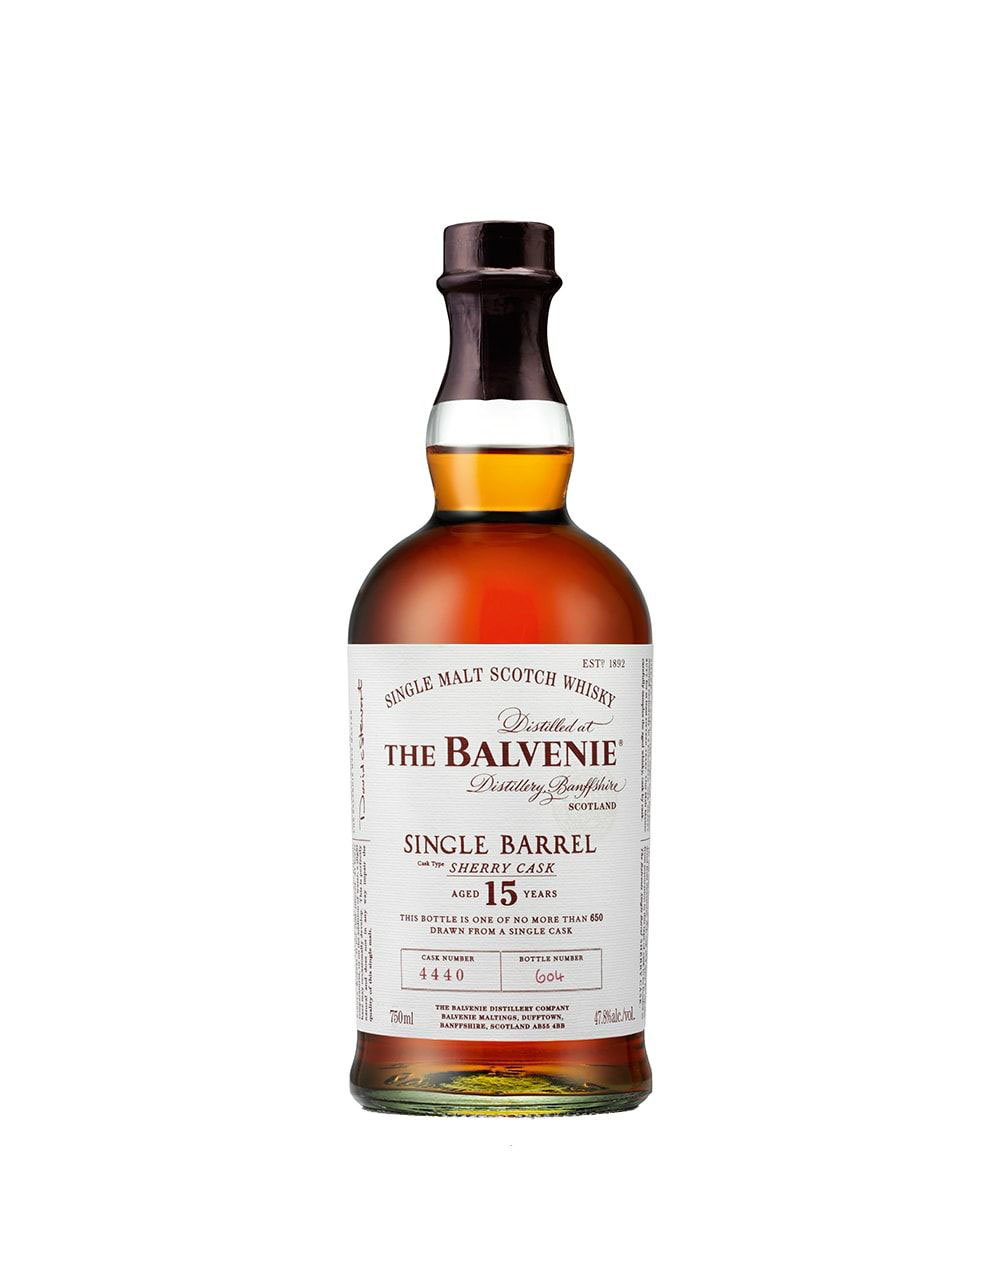 The Balvenie Single Barrel Aged 15 Years